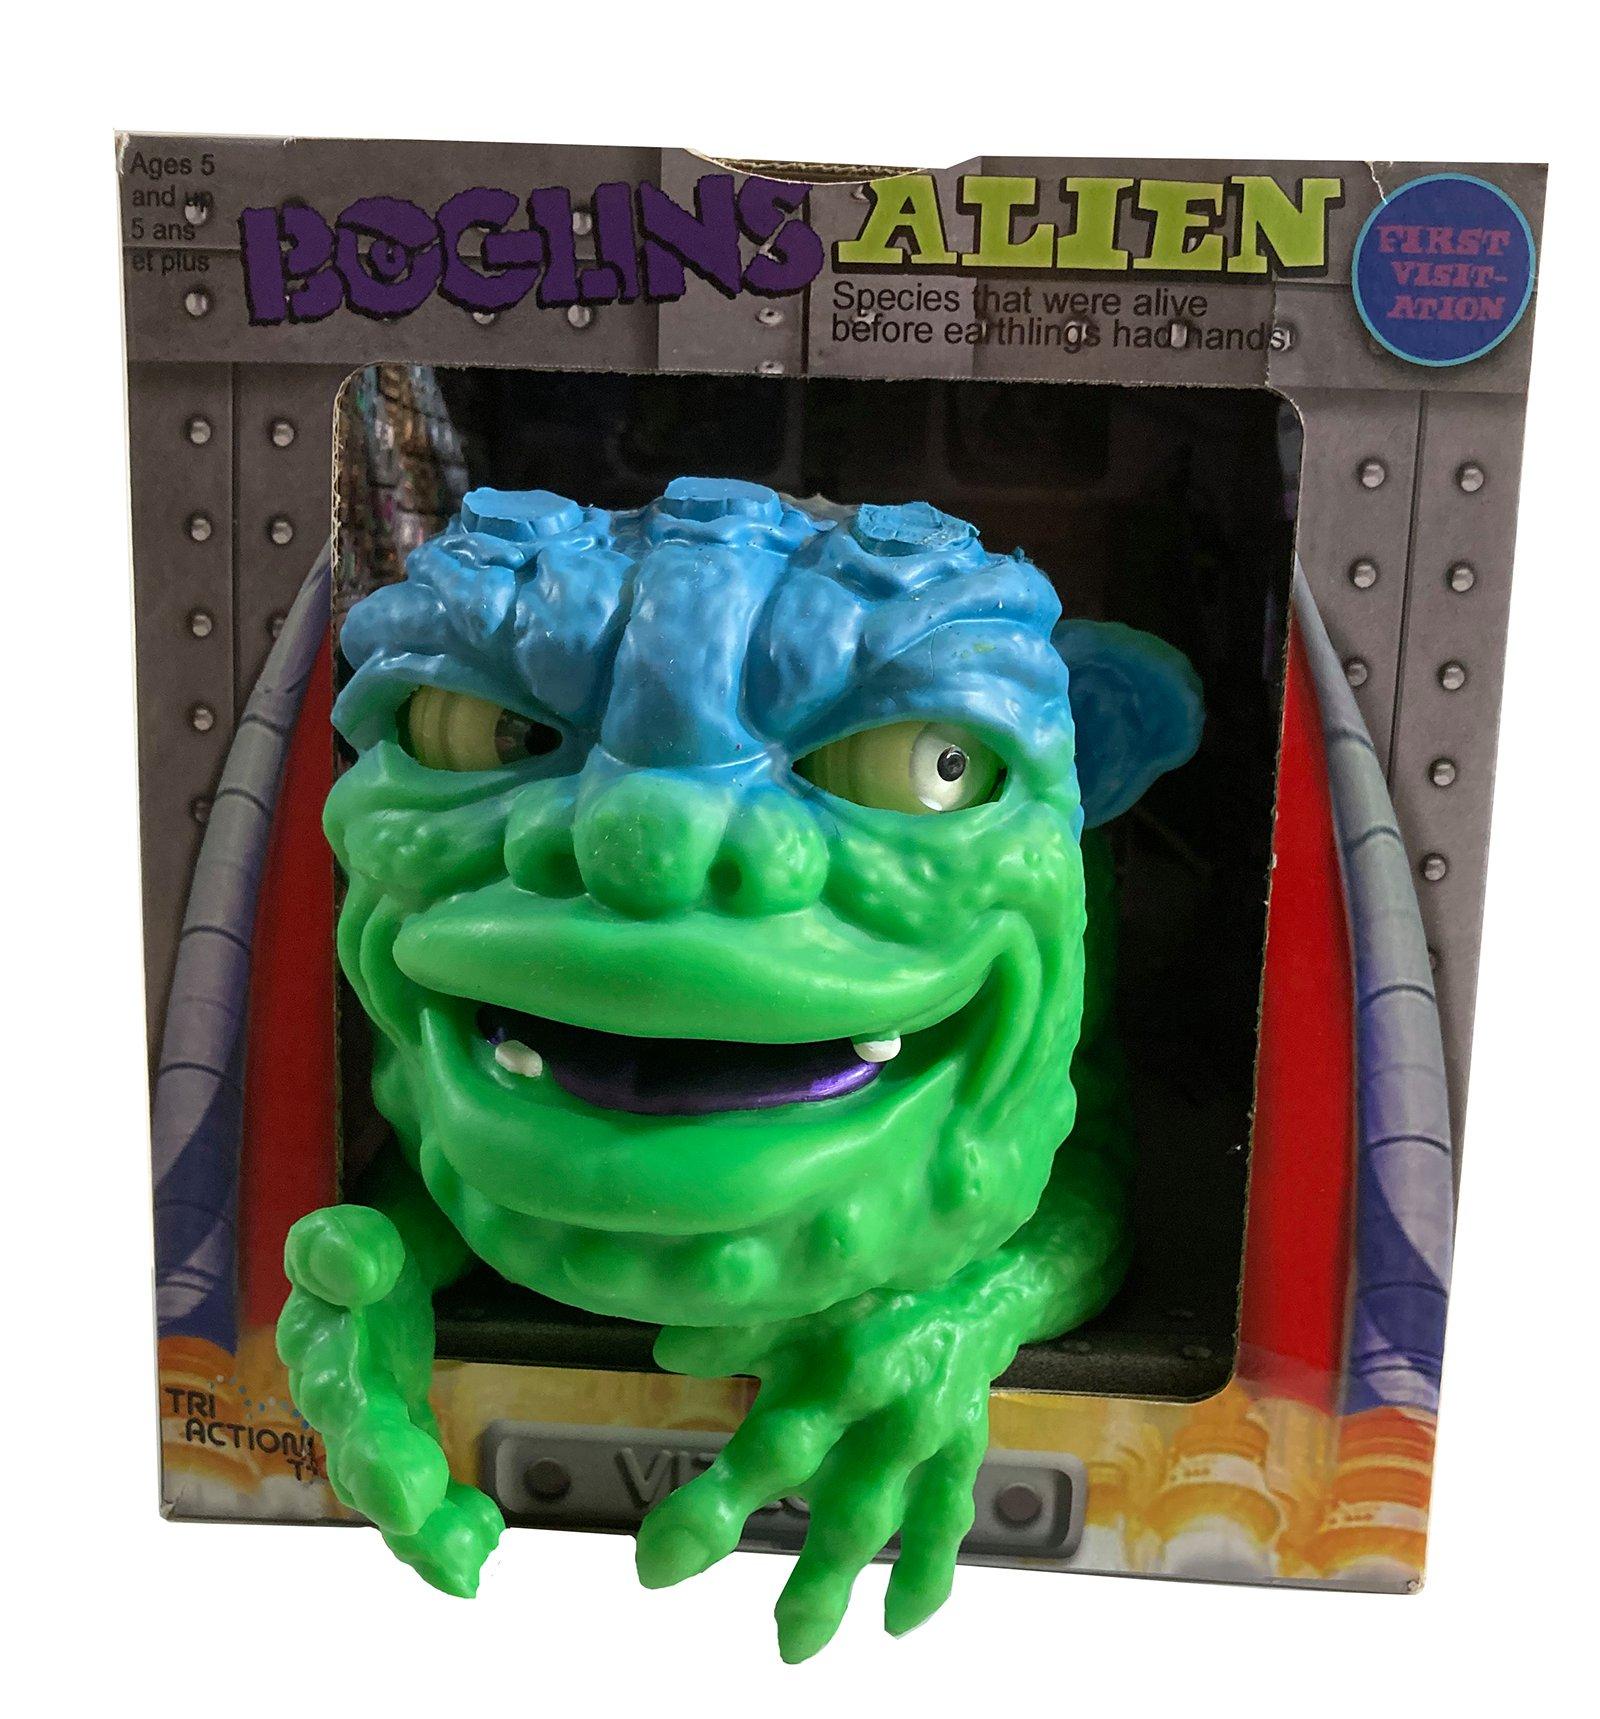 Triaction Toys Boglins Foam Monster Puppet